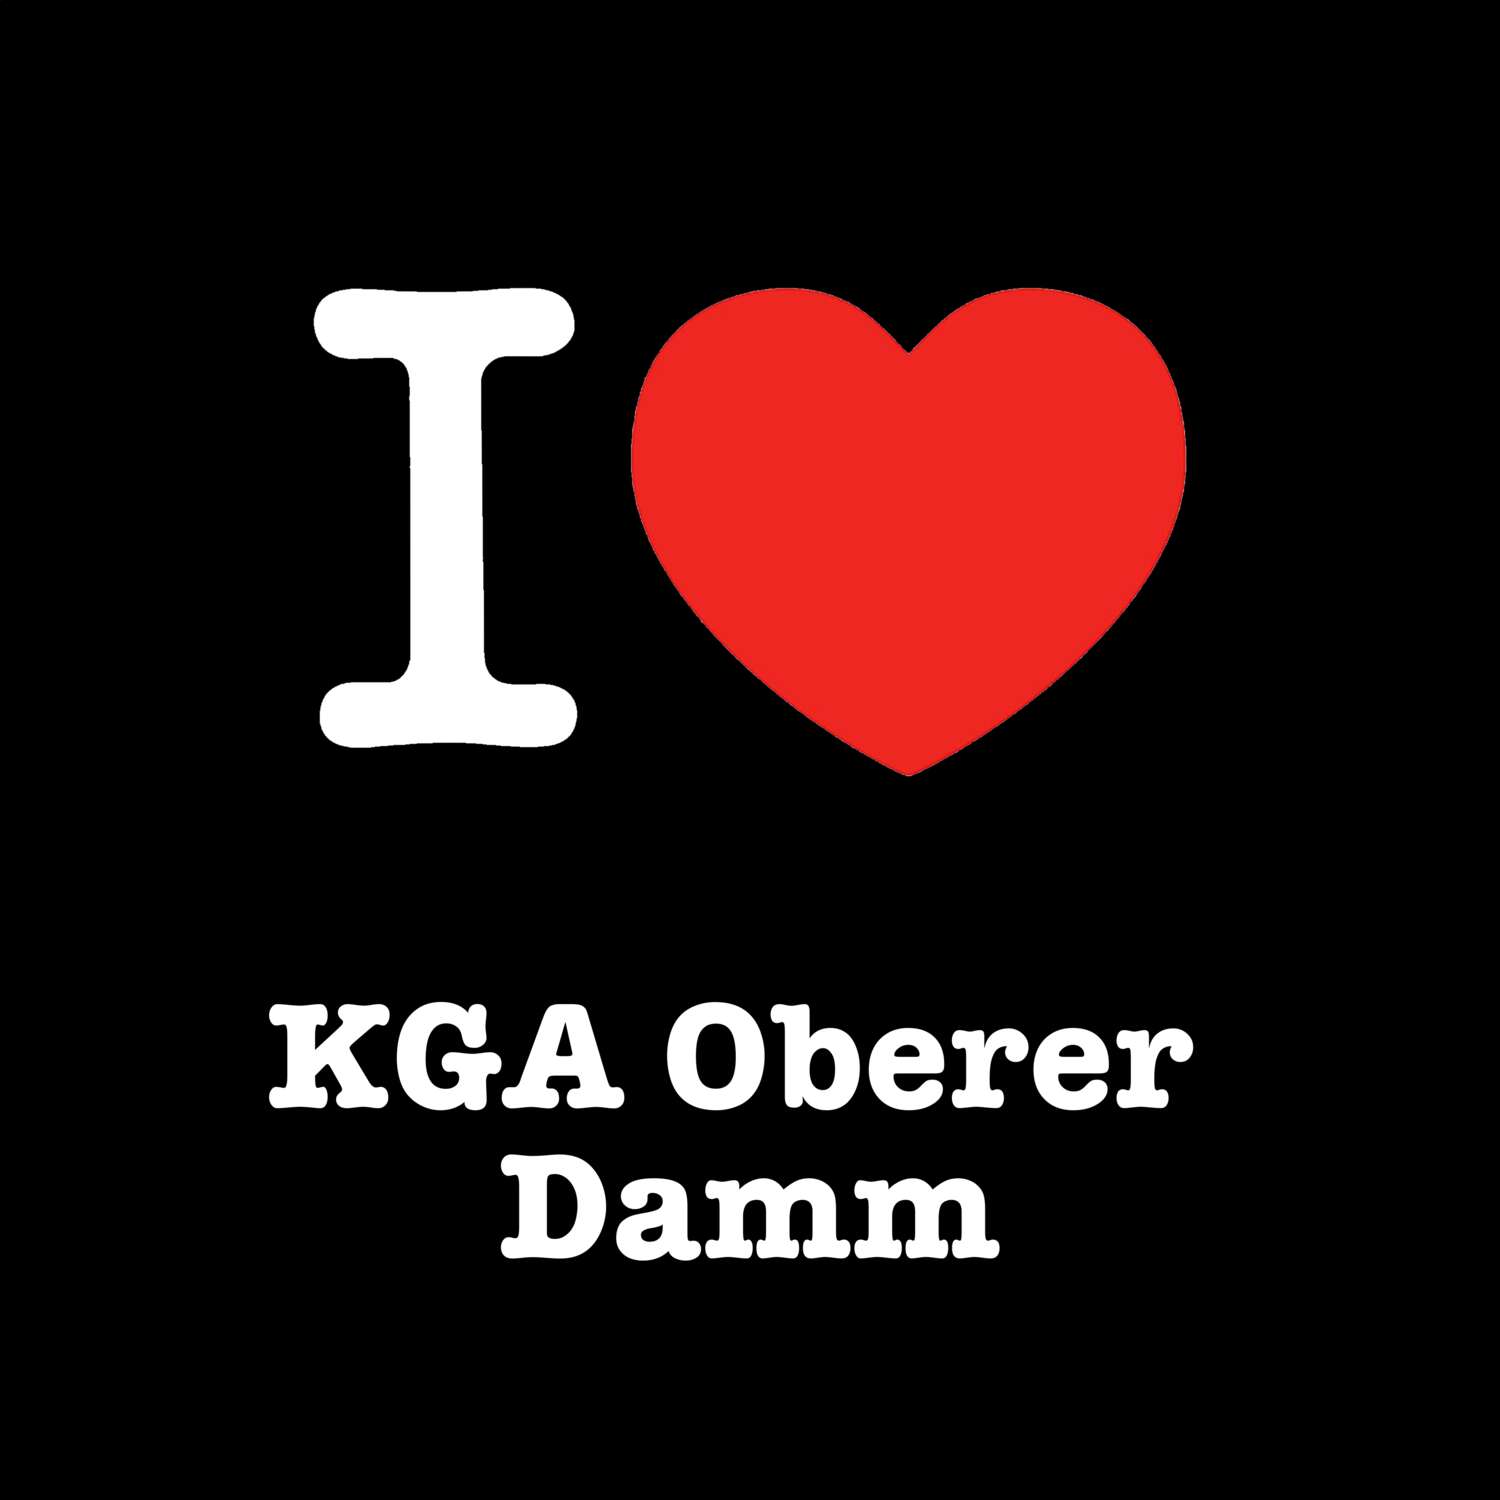 KGA Oberer Damm T-Shirt »I love«